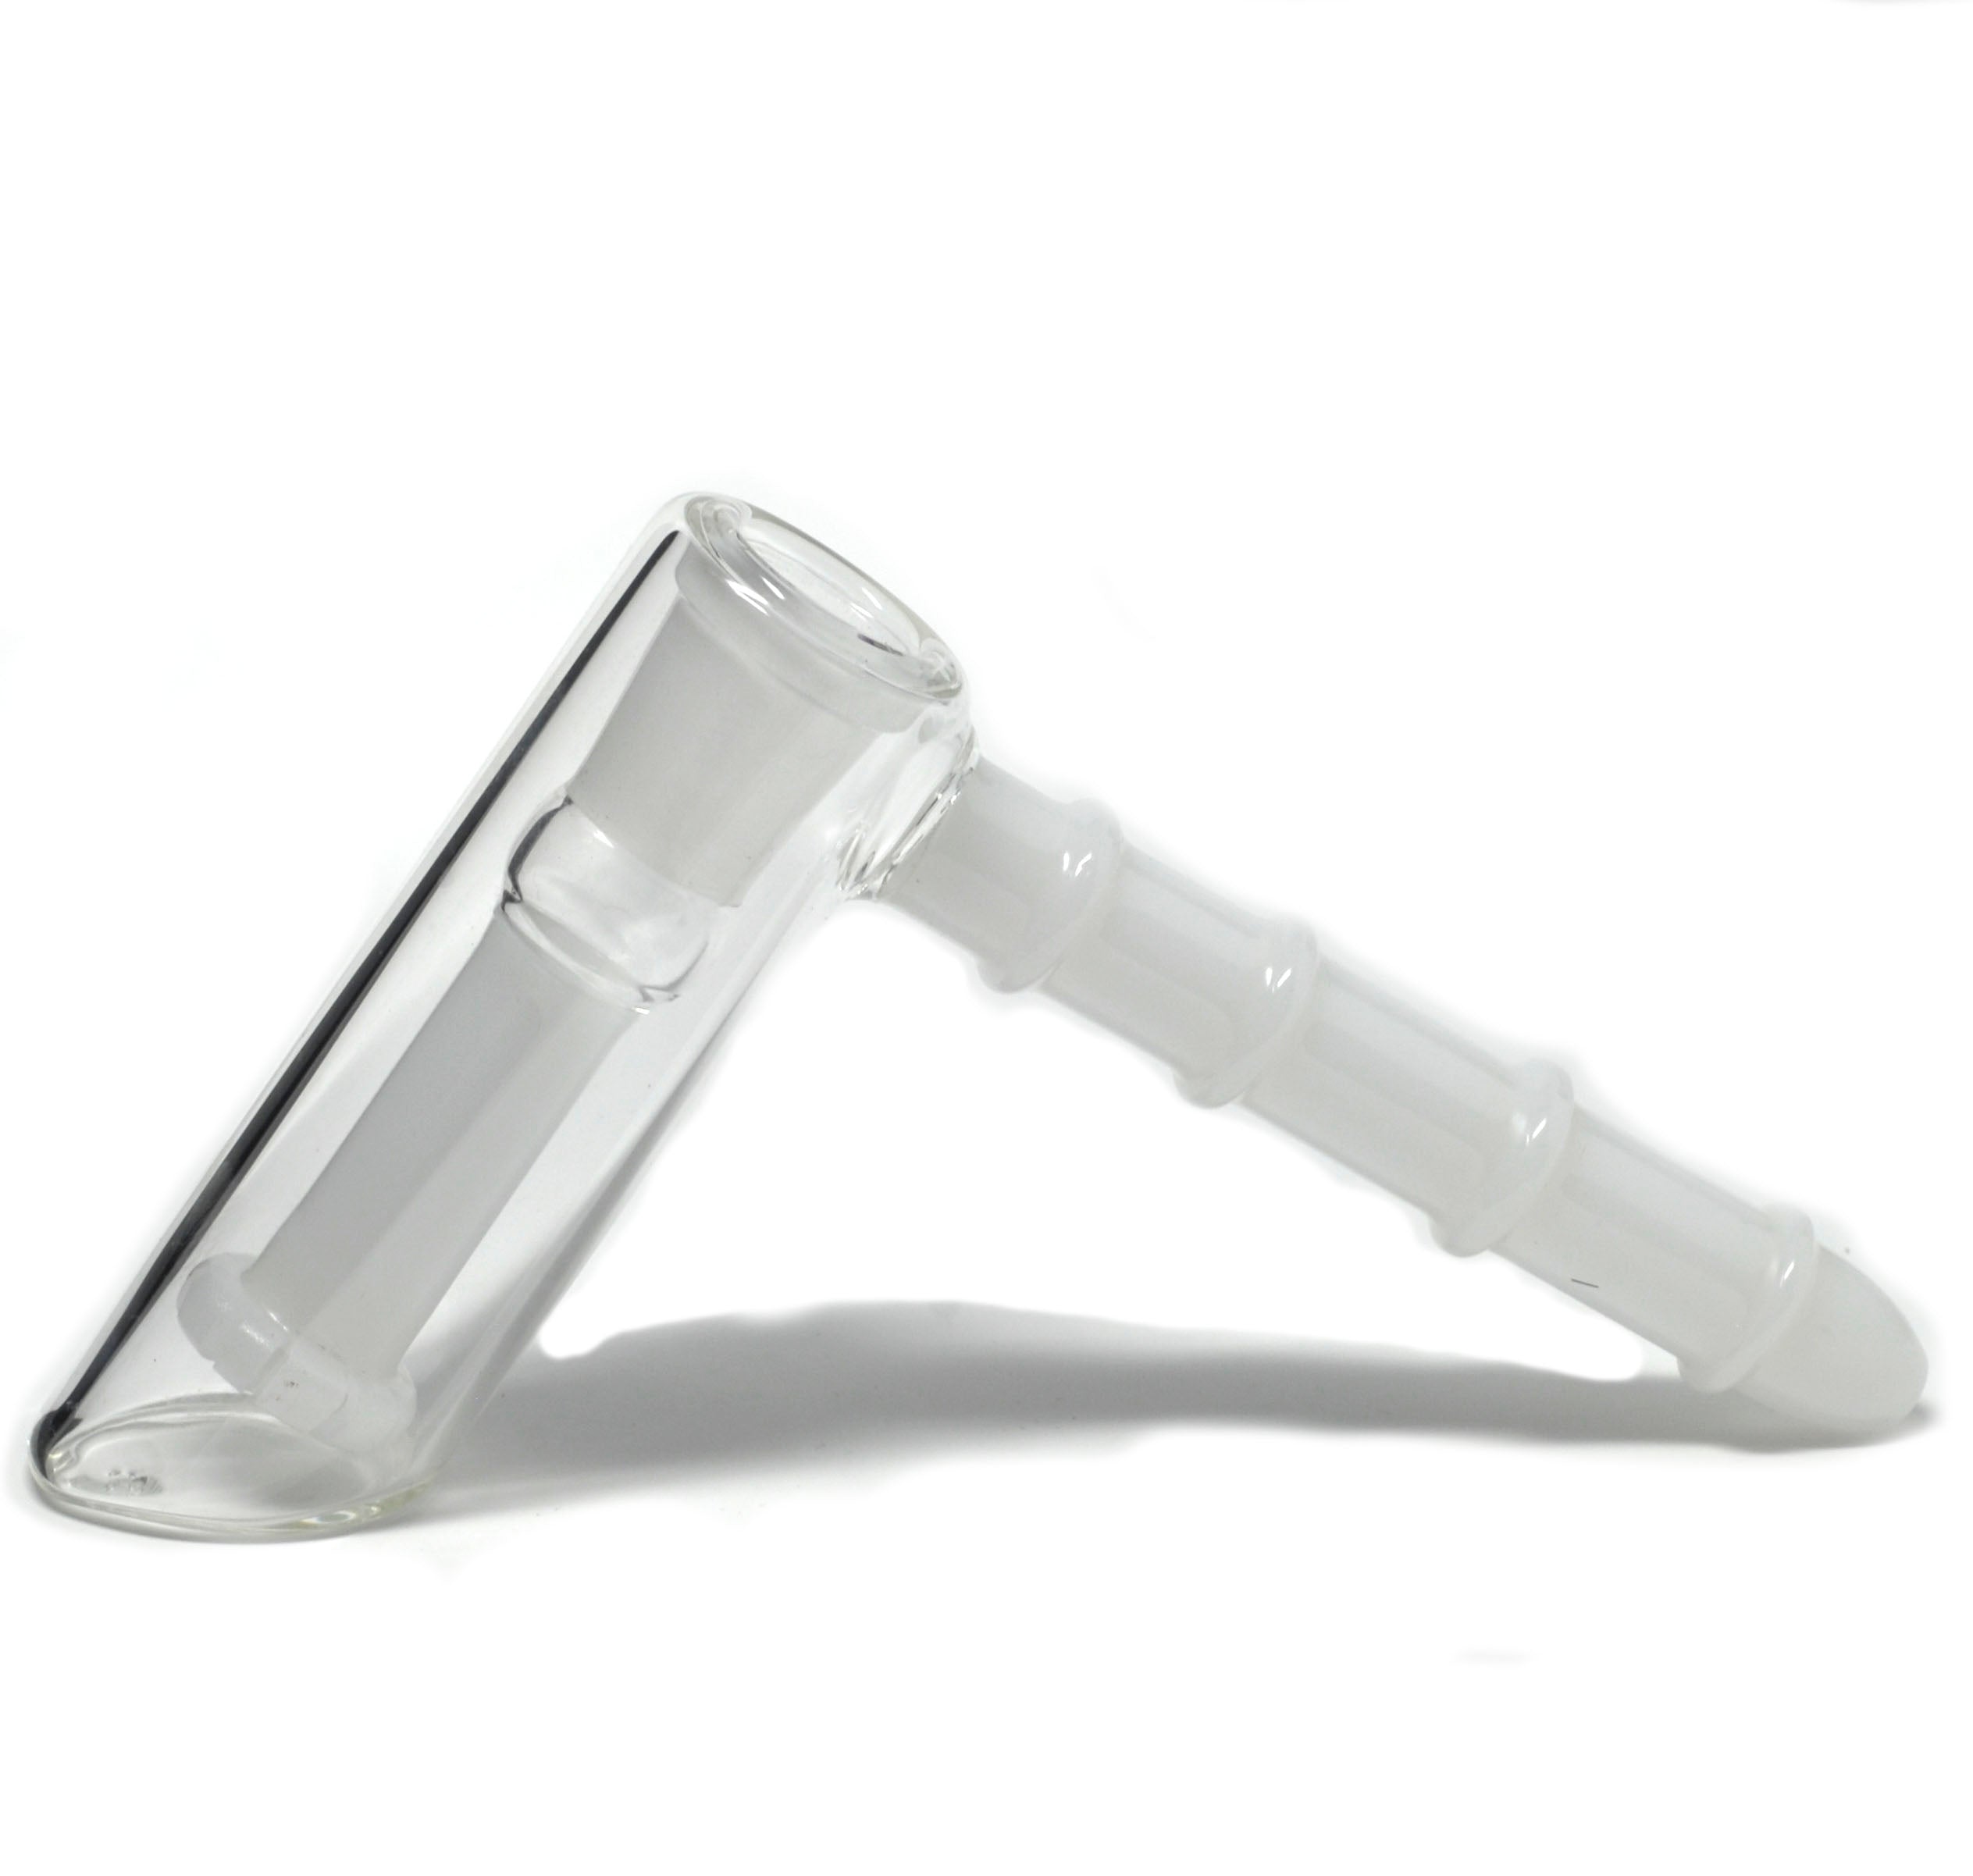 6" Hammer glass pipe